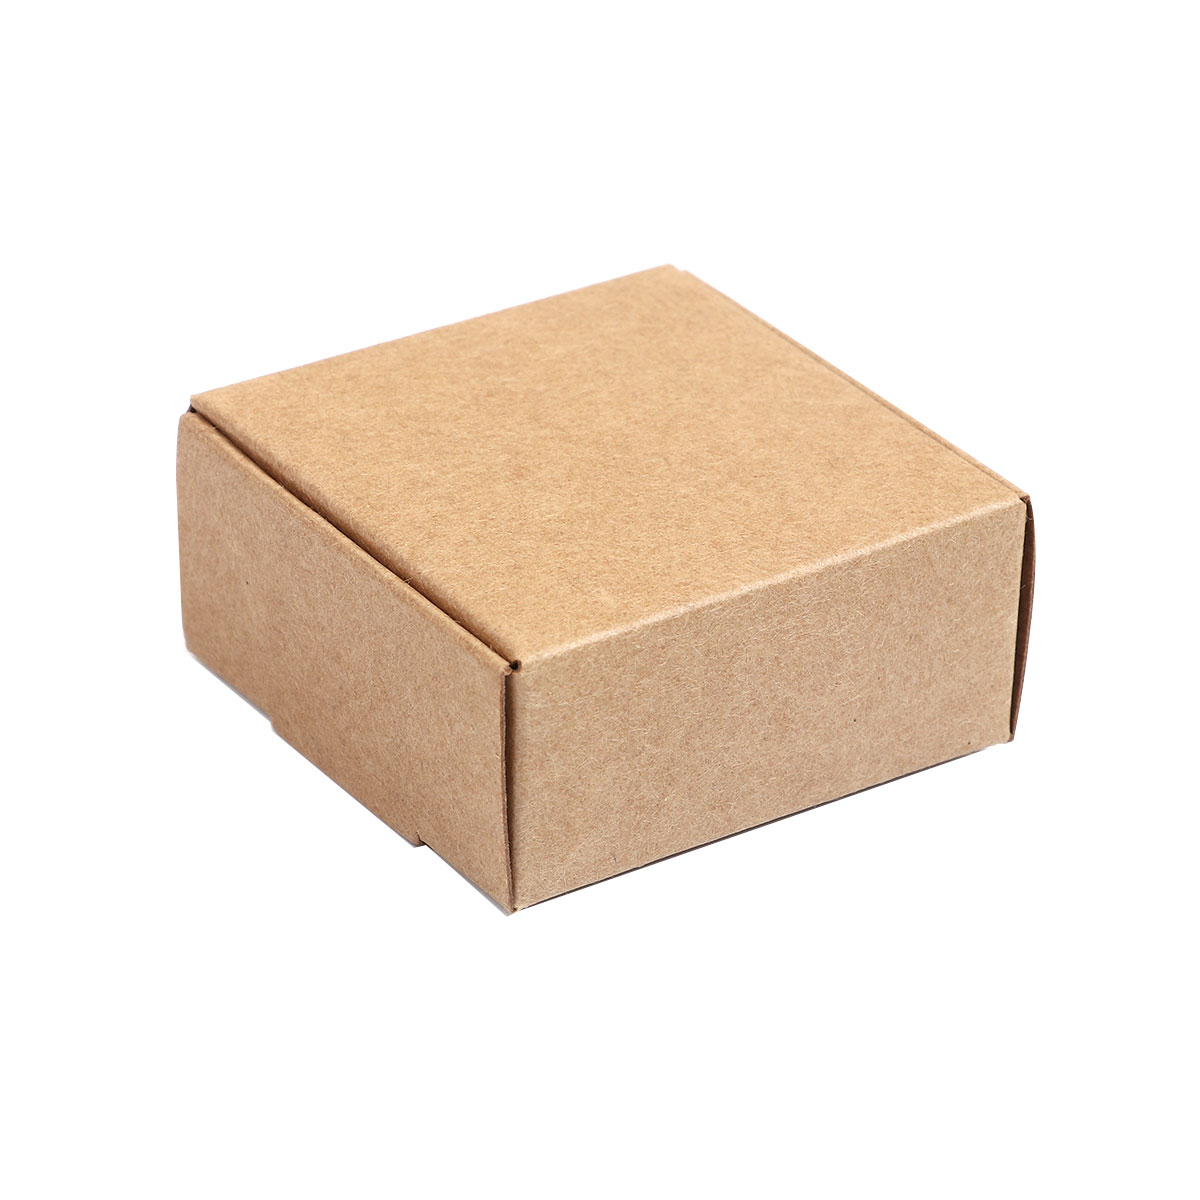 50 x Kraftpapier Geschenkschachtel Schachtel Gastgeschenk Box Geschenkkarton